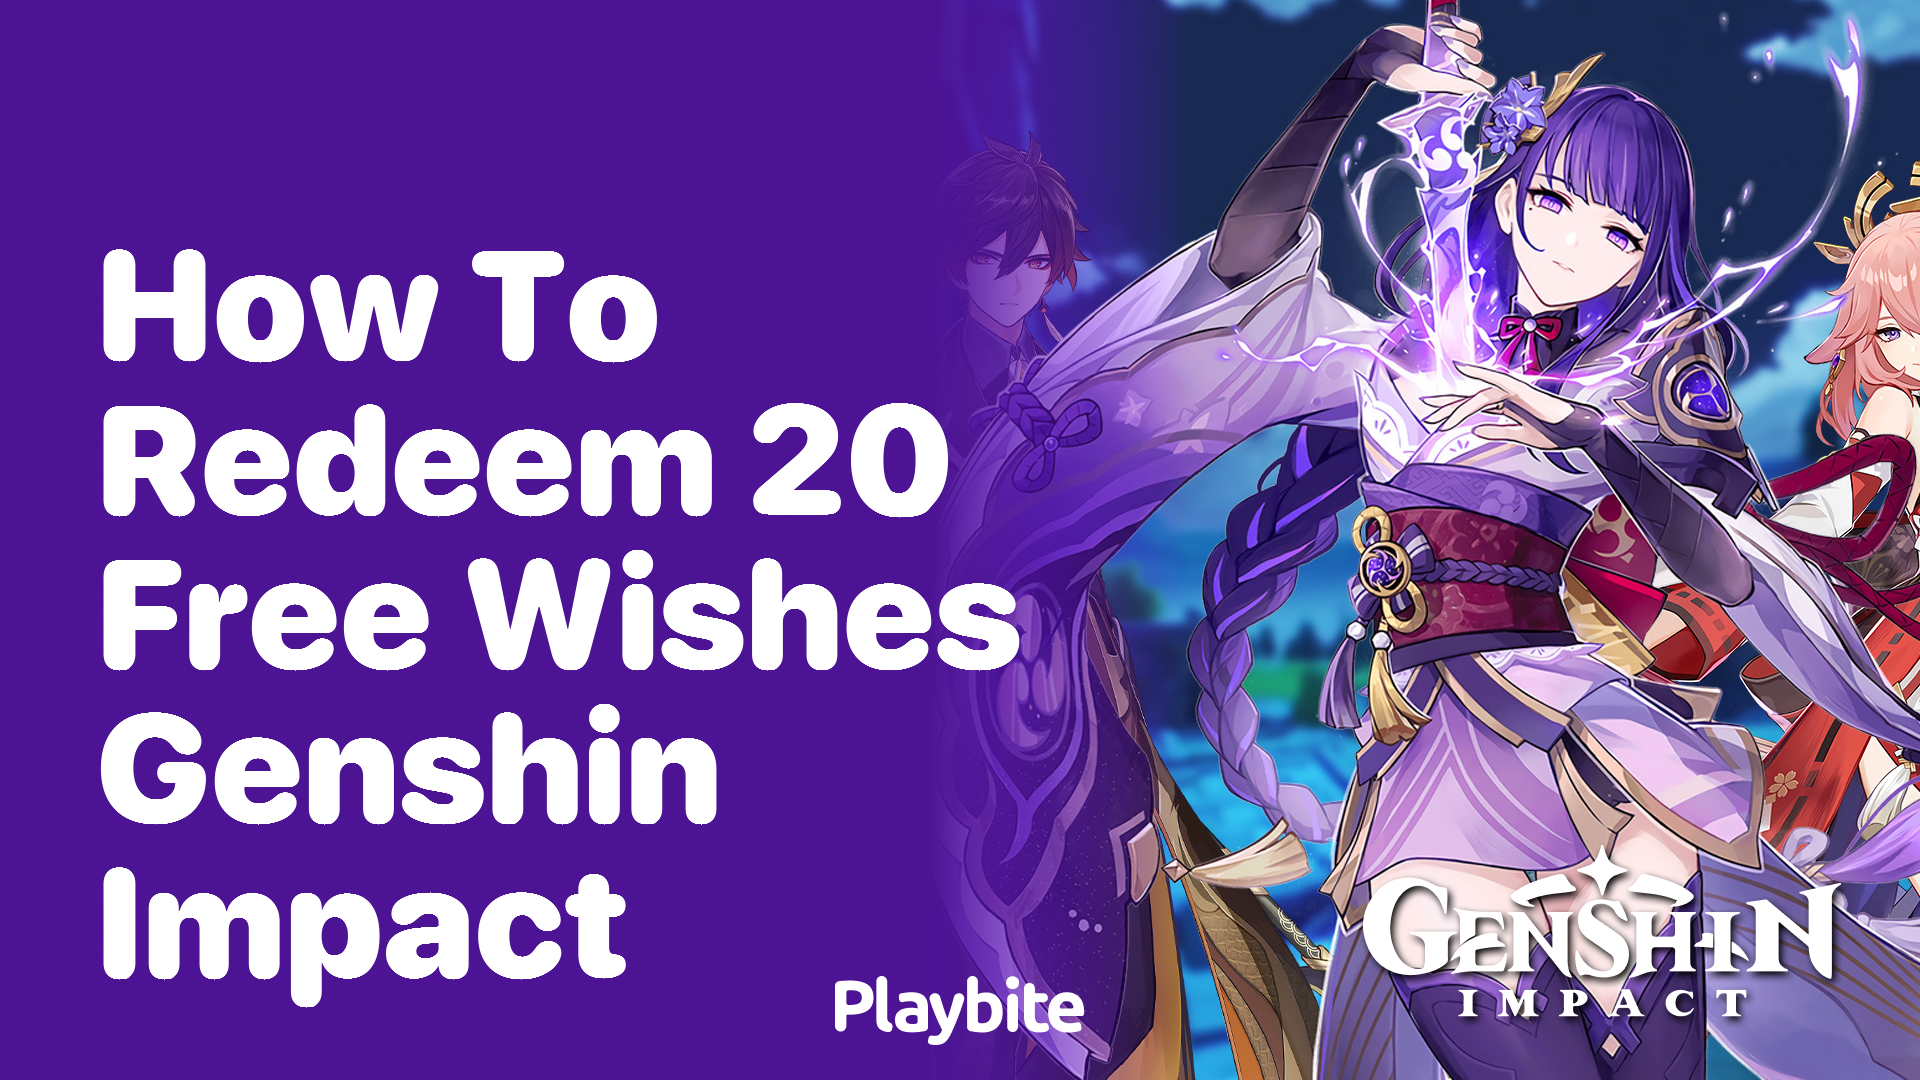 20 free wishes? Where? Genshin Impact